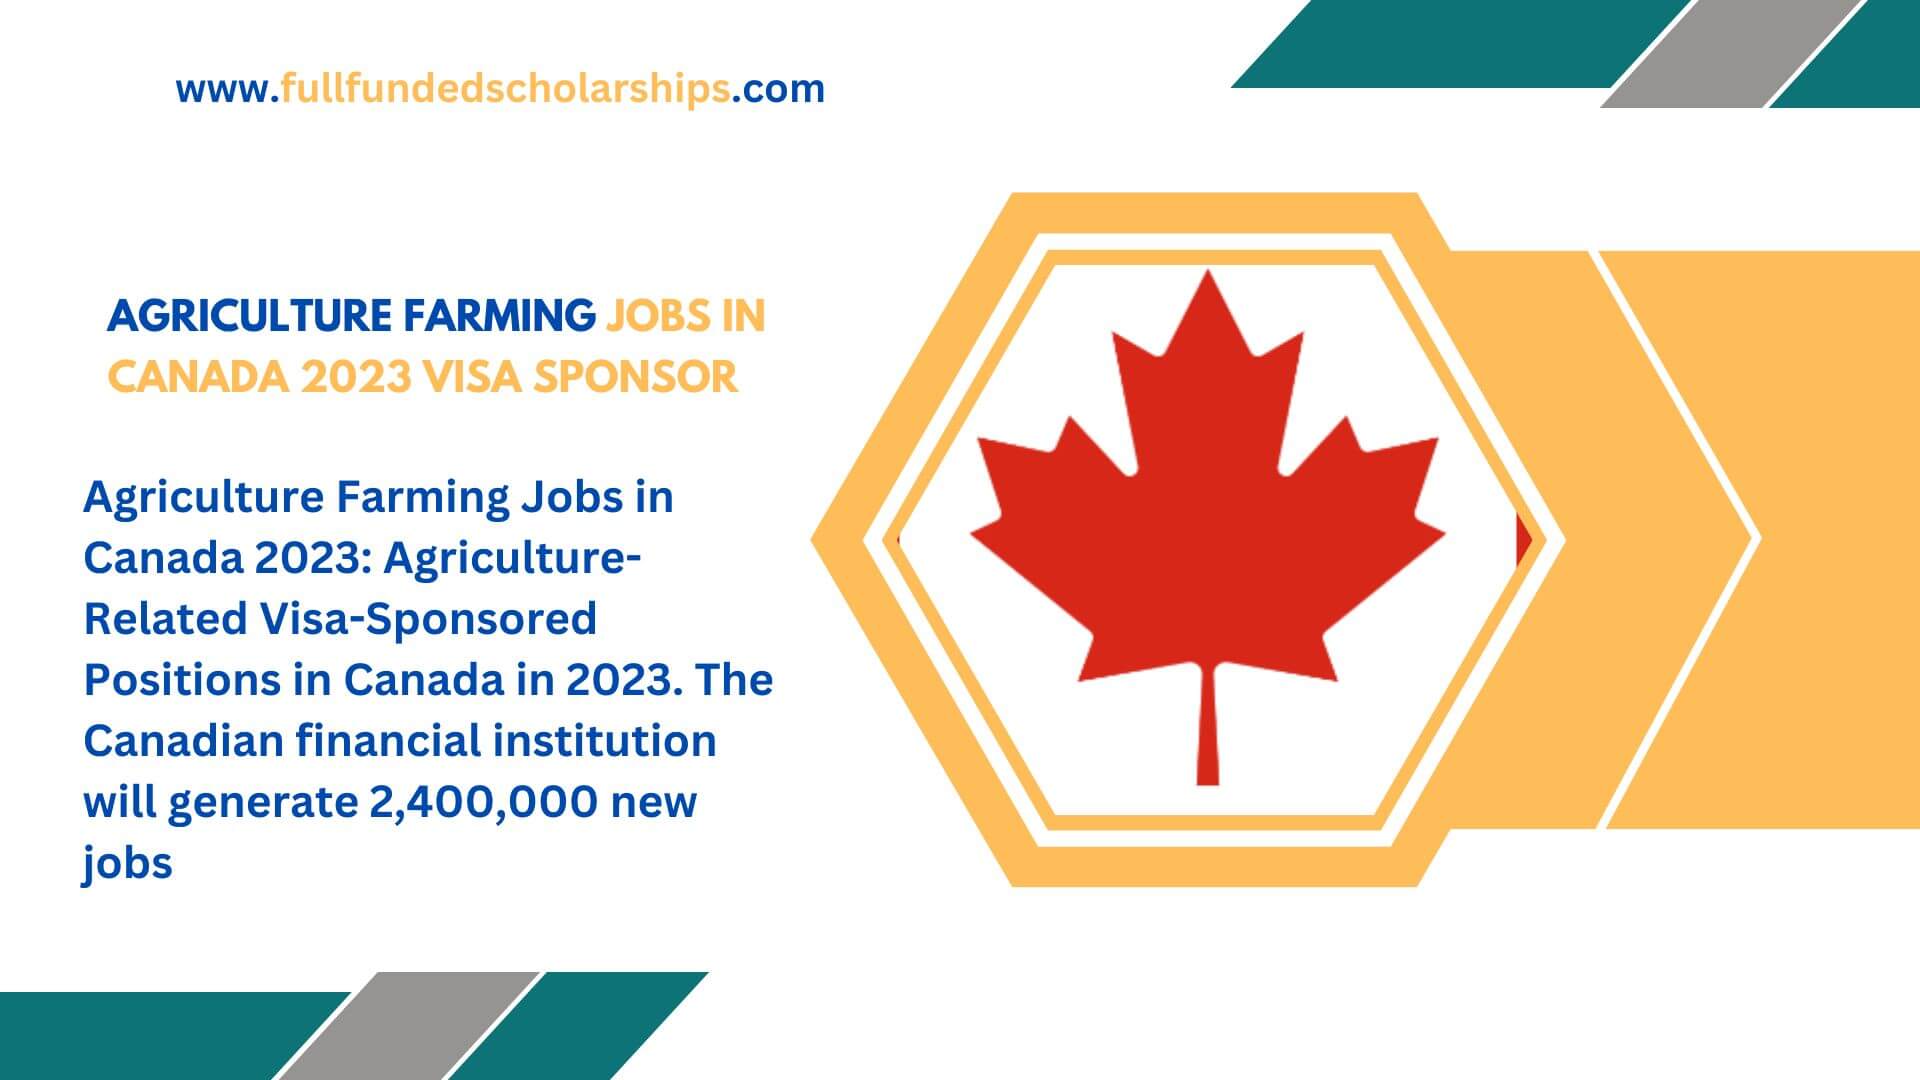 Agriculture Farming Jobs in Canada 2023 Visa Sponsor